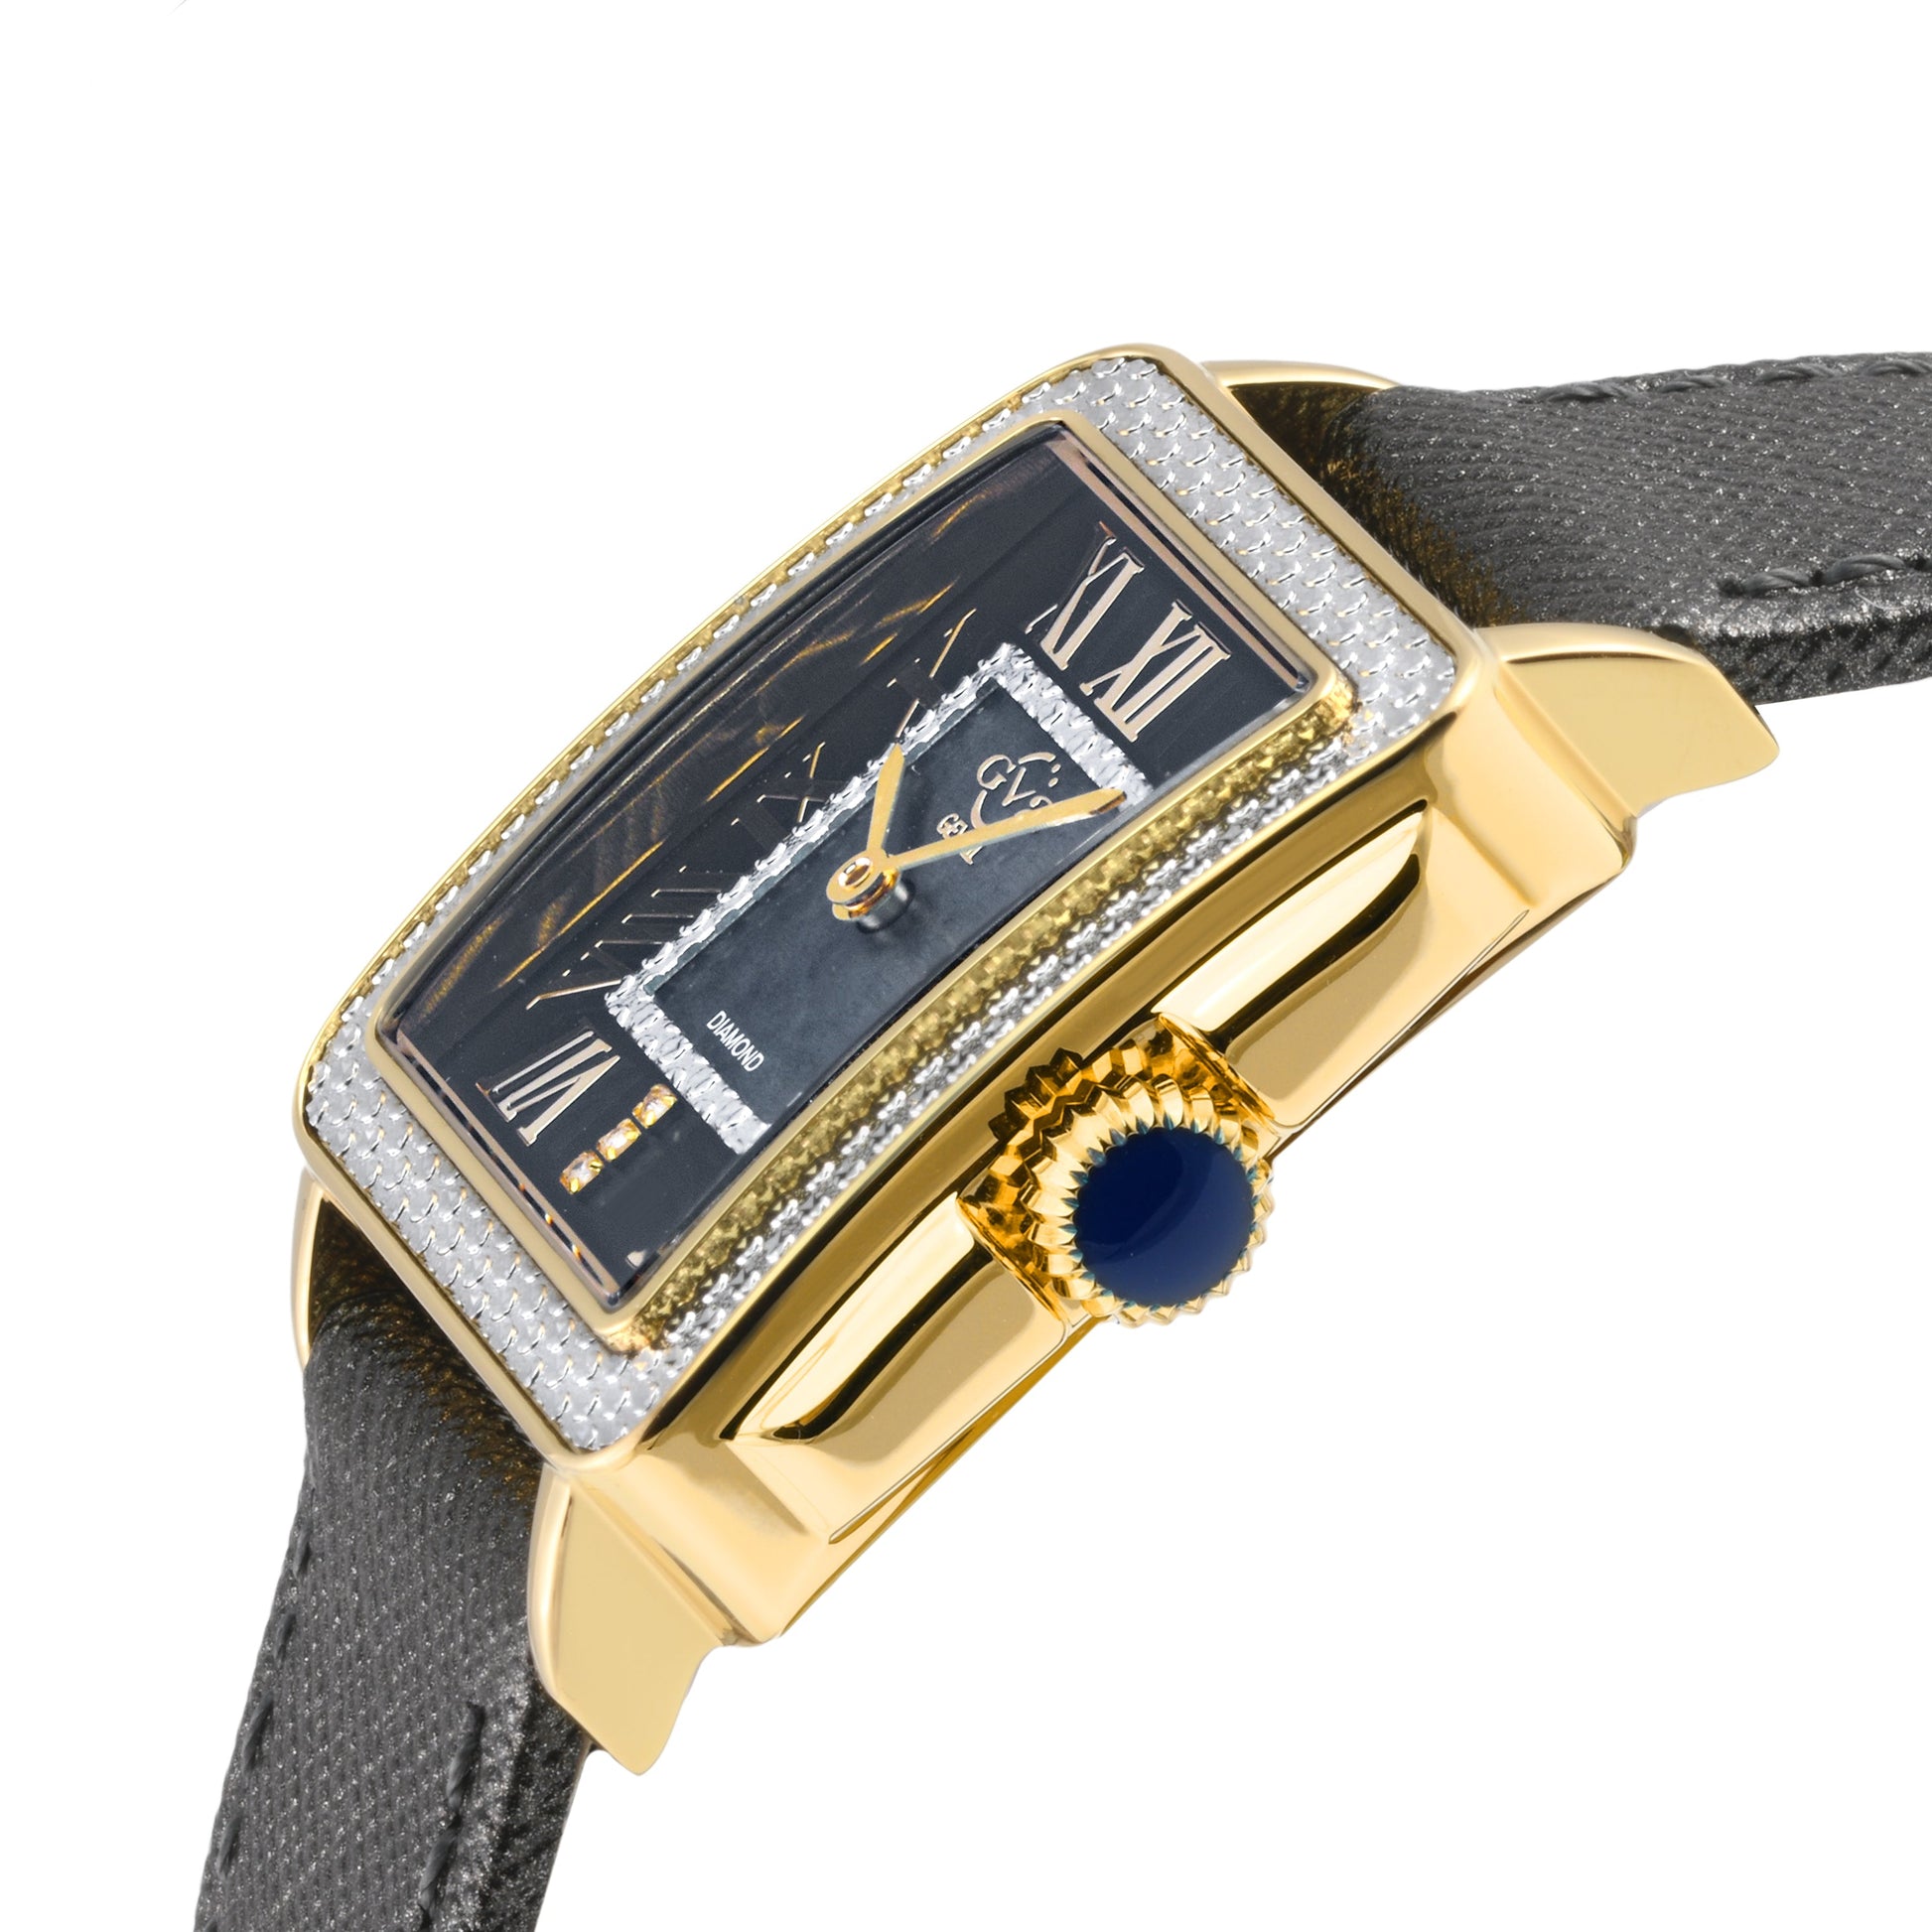 Gevril-Luxury-Swiss-Watches-GV2 Padova Diamond-12307